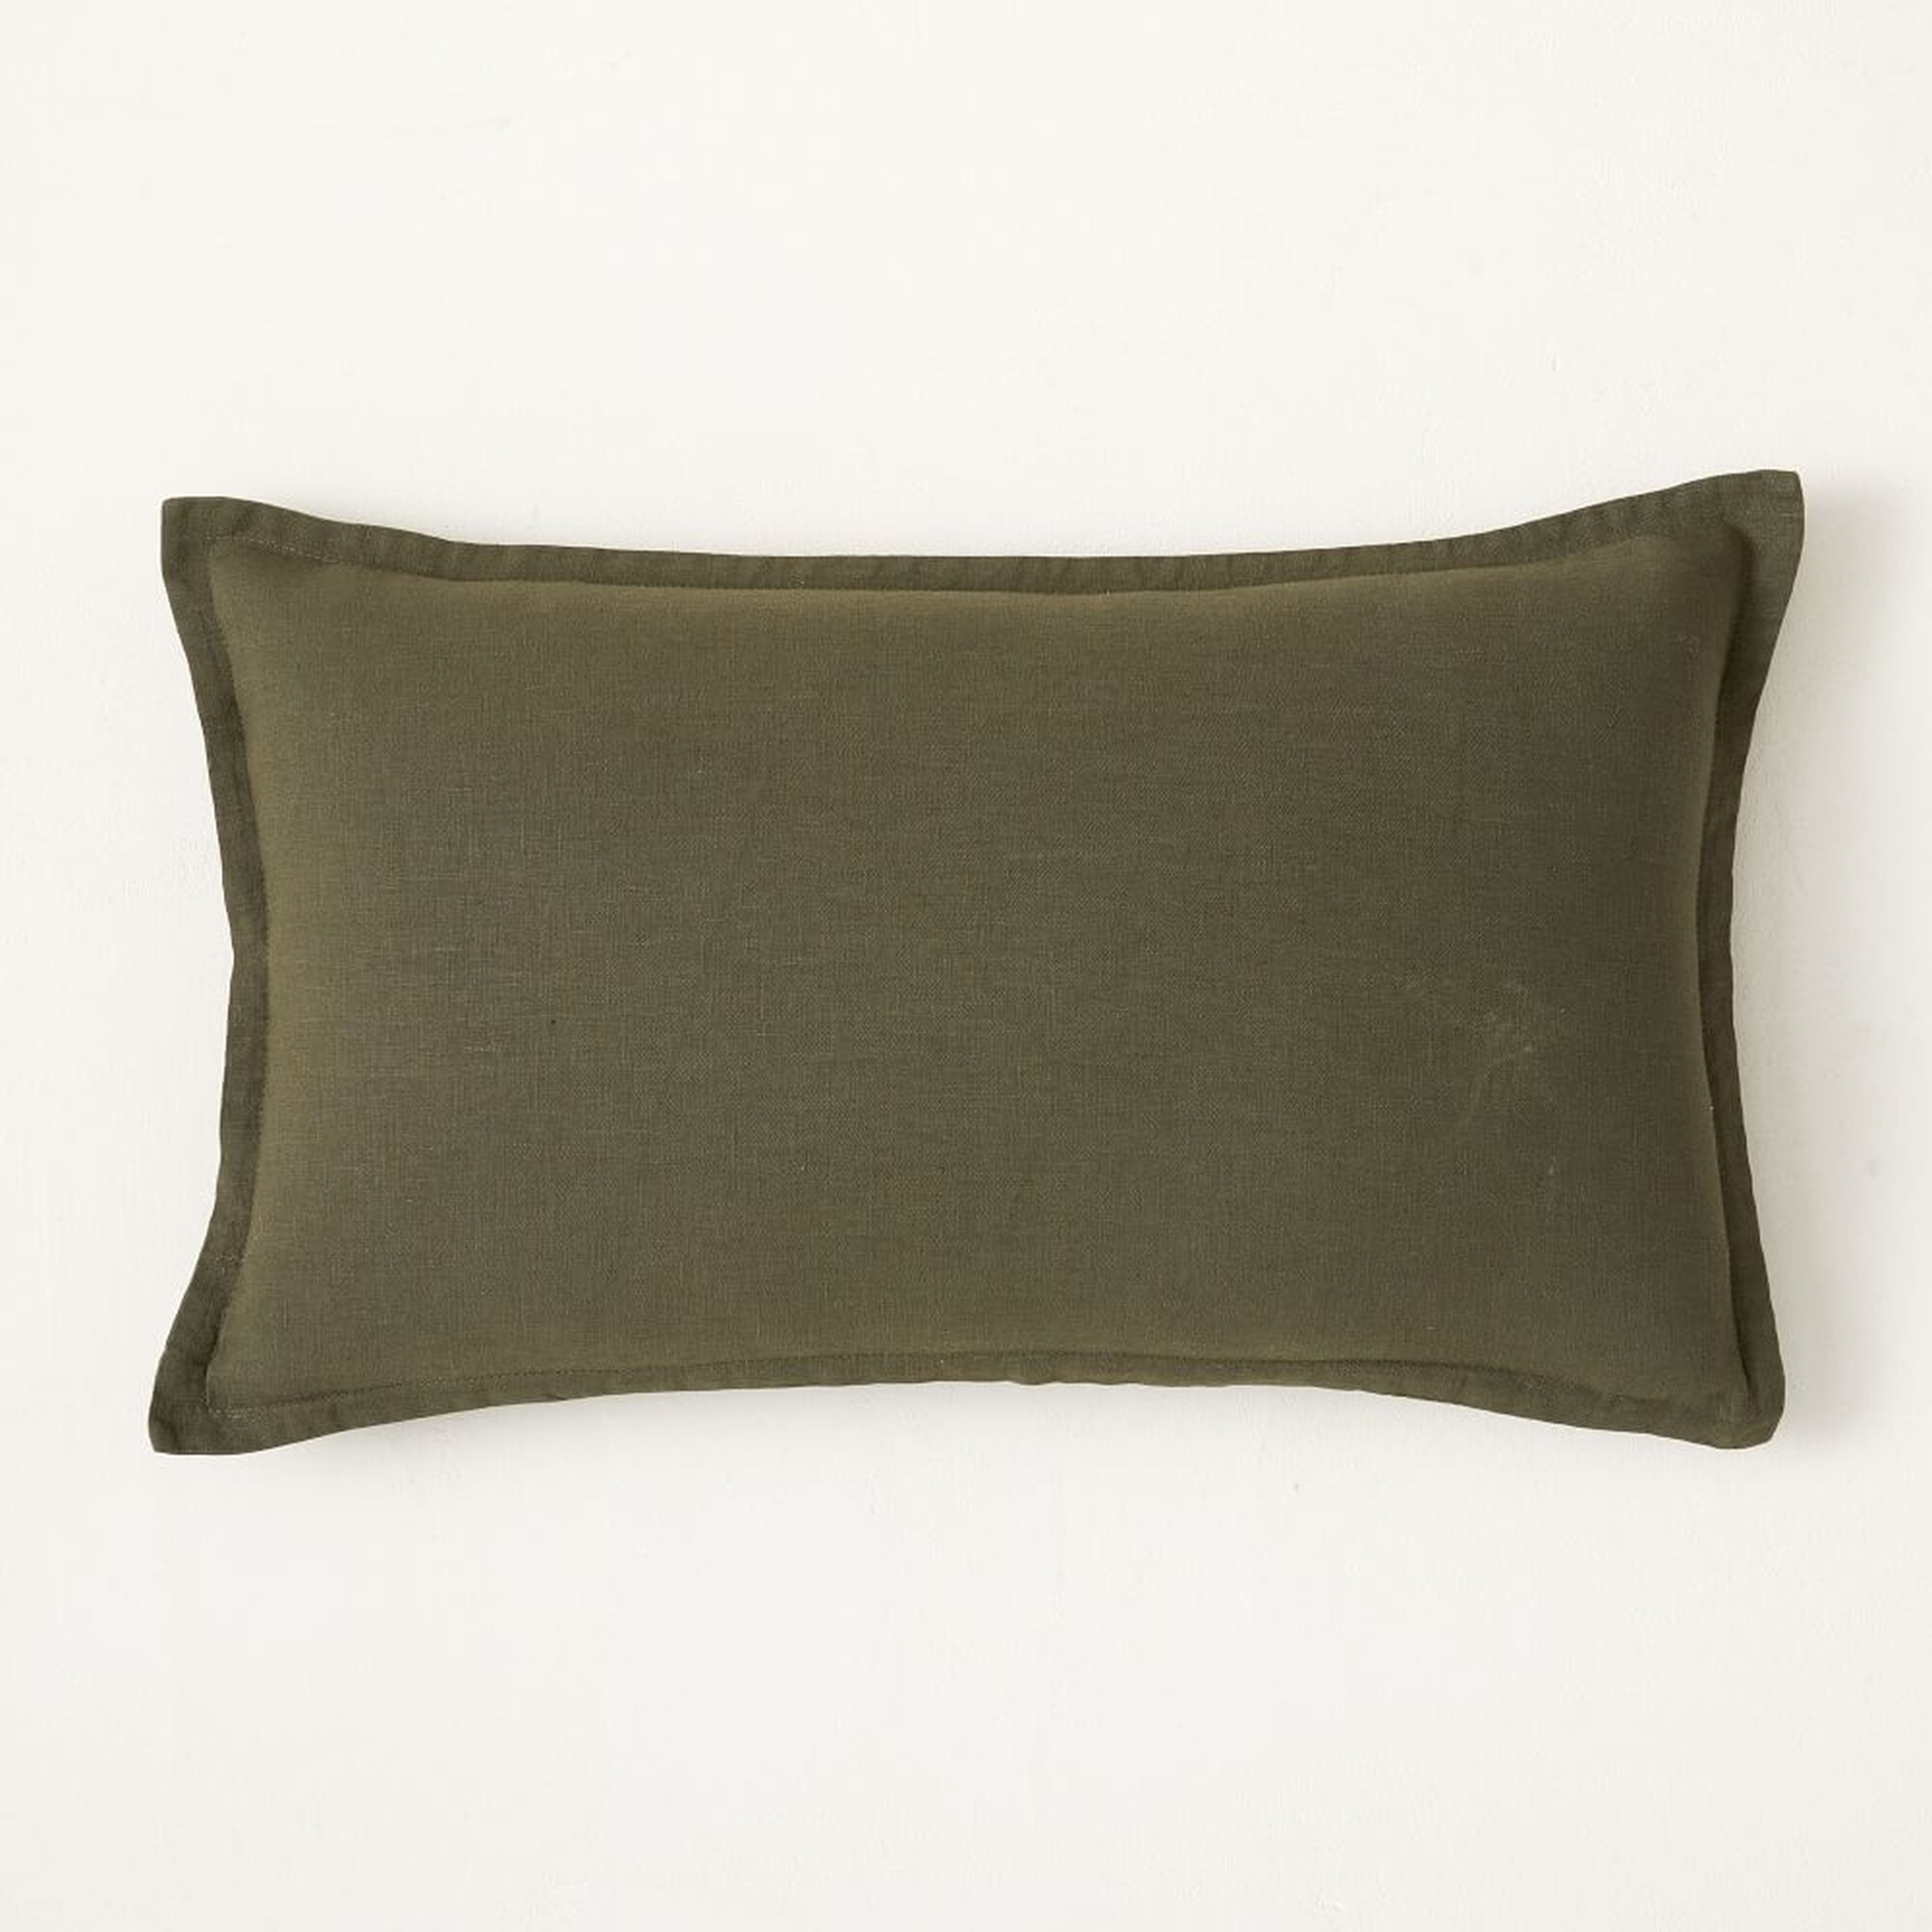 European Flax Linen Pillow Cover, 12"x21", Dark Olive - West Elm